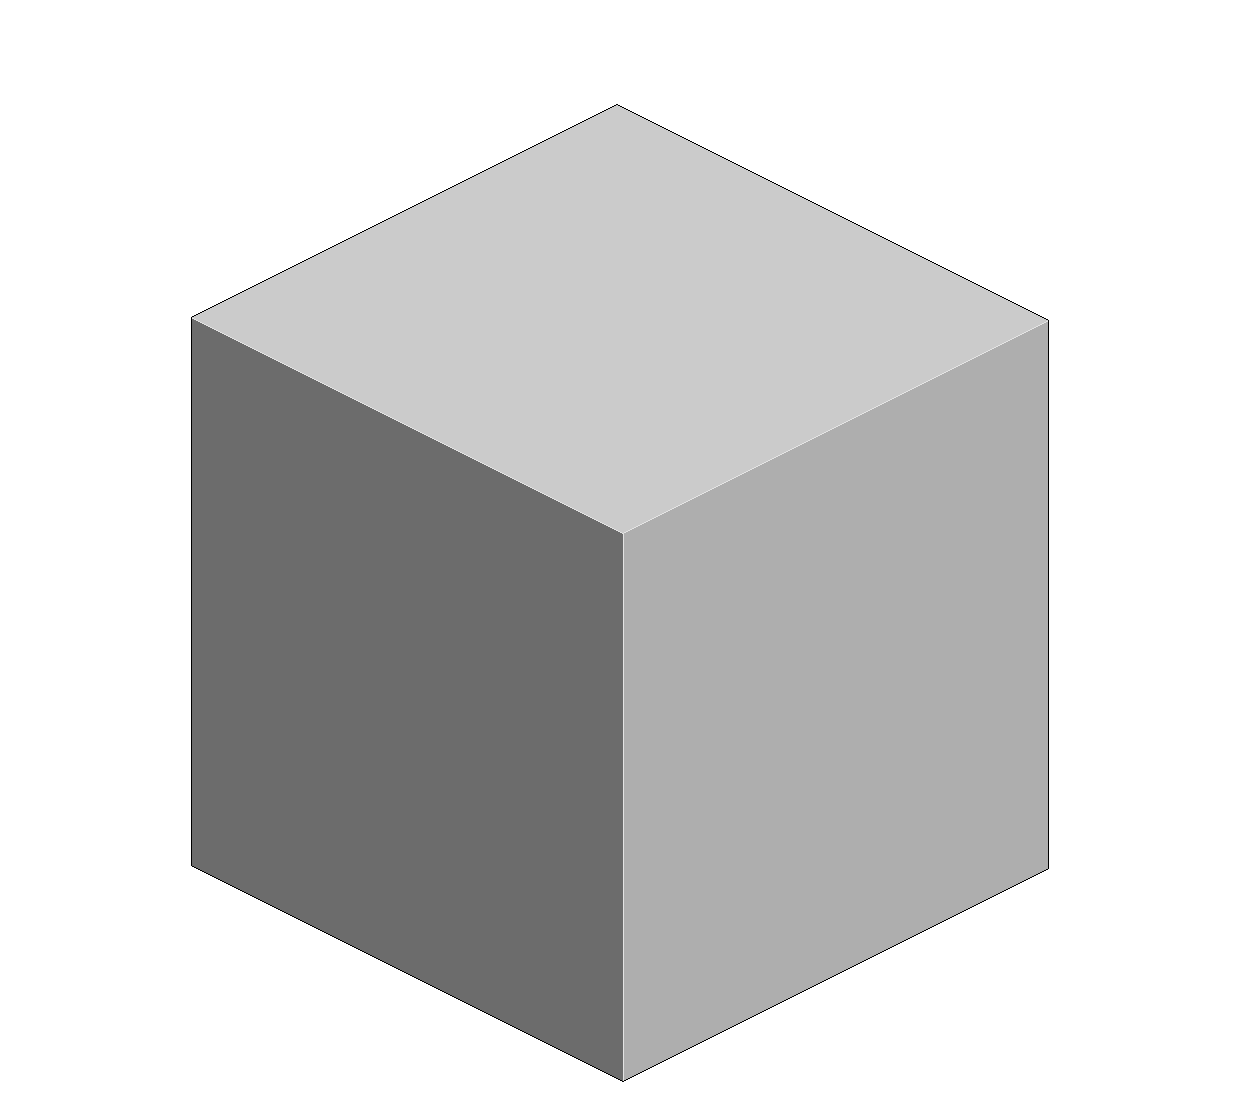 Geometric abstract logo cube